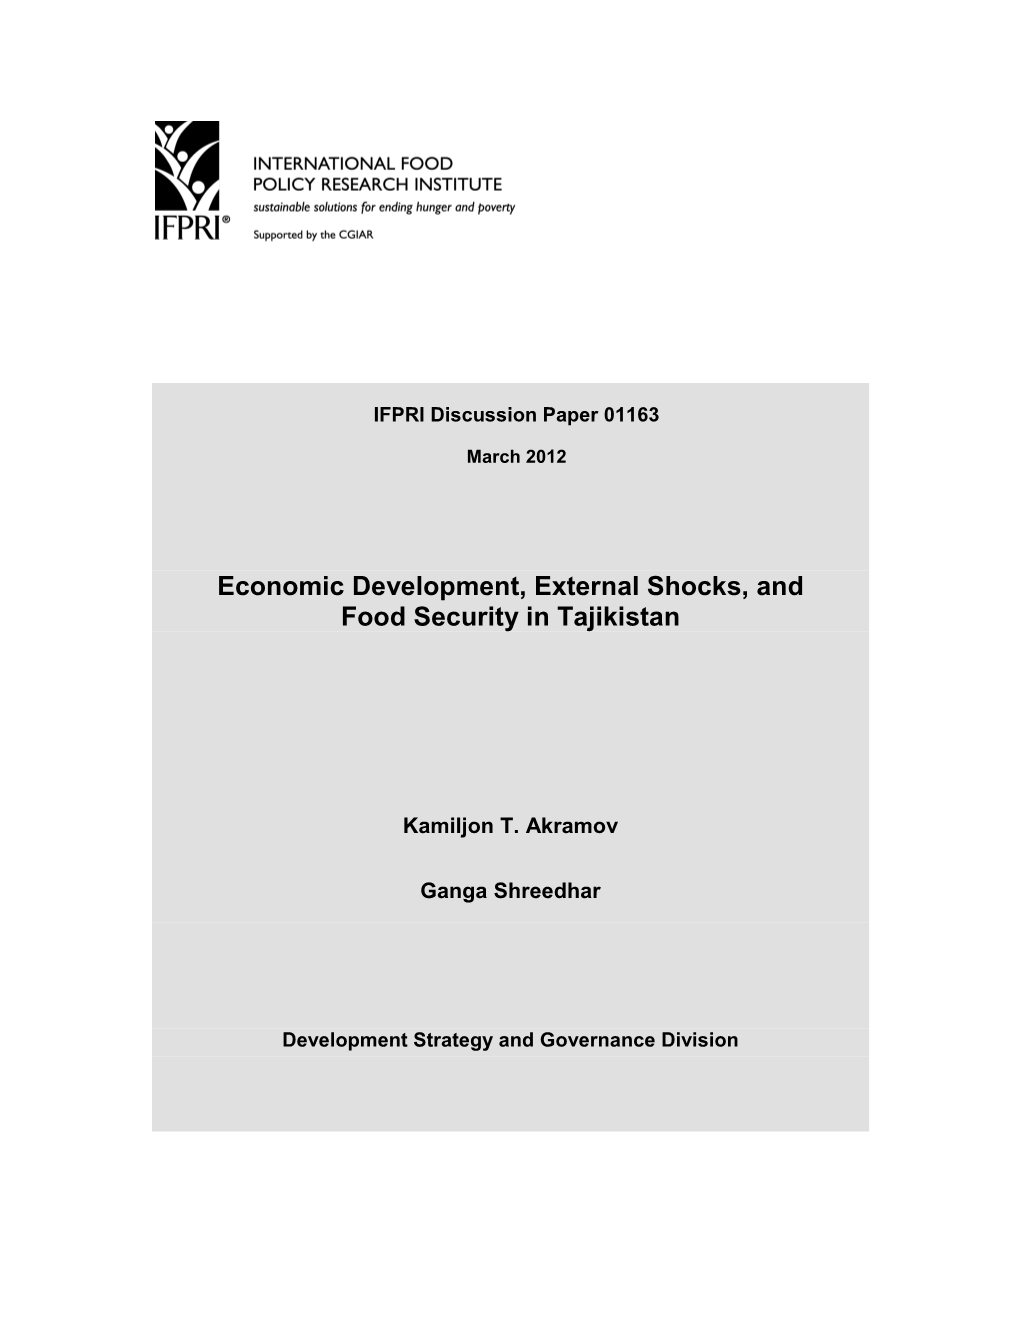 Economic Development, External Shocks, and Food Security in Tajikistan